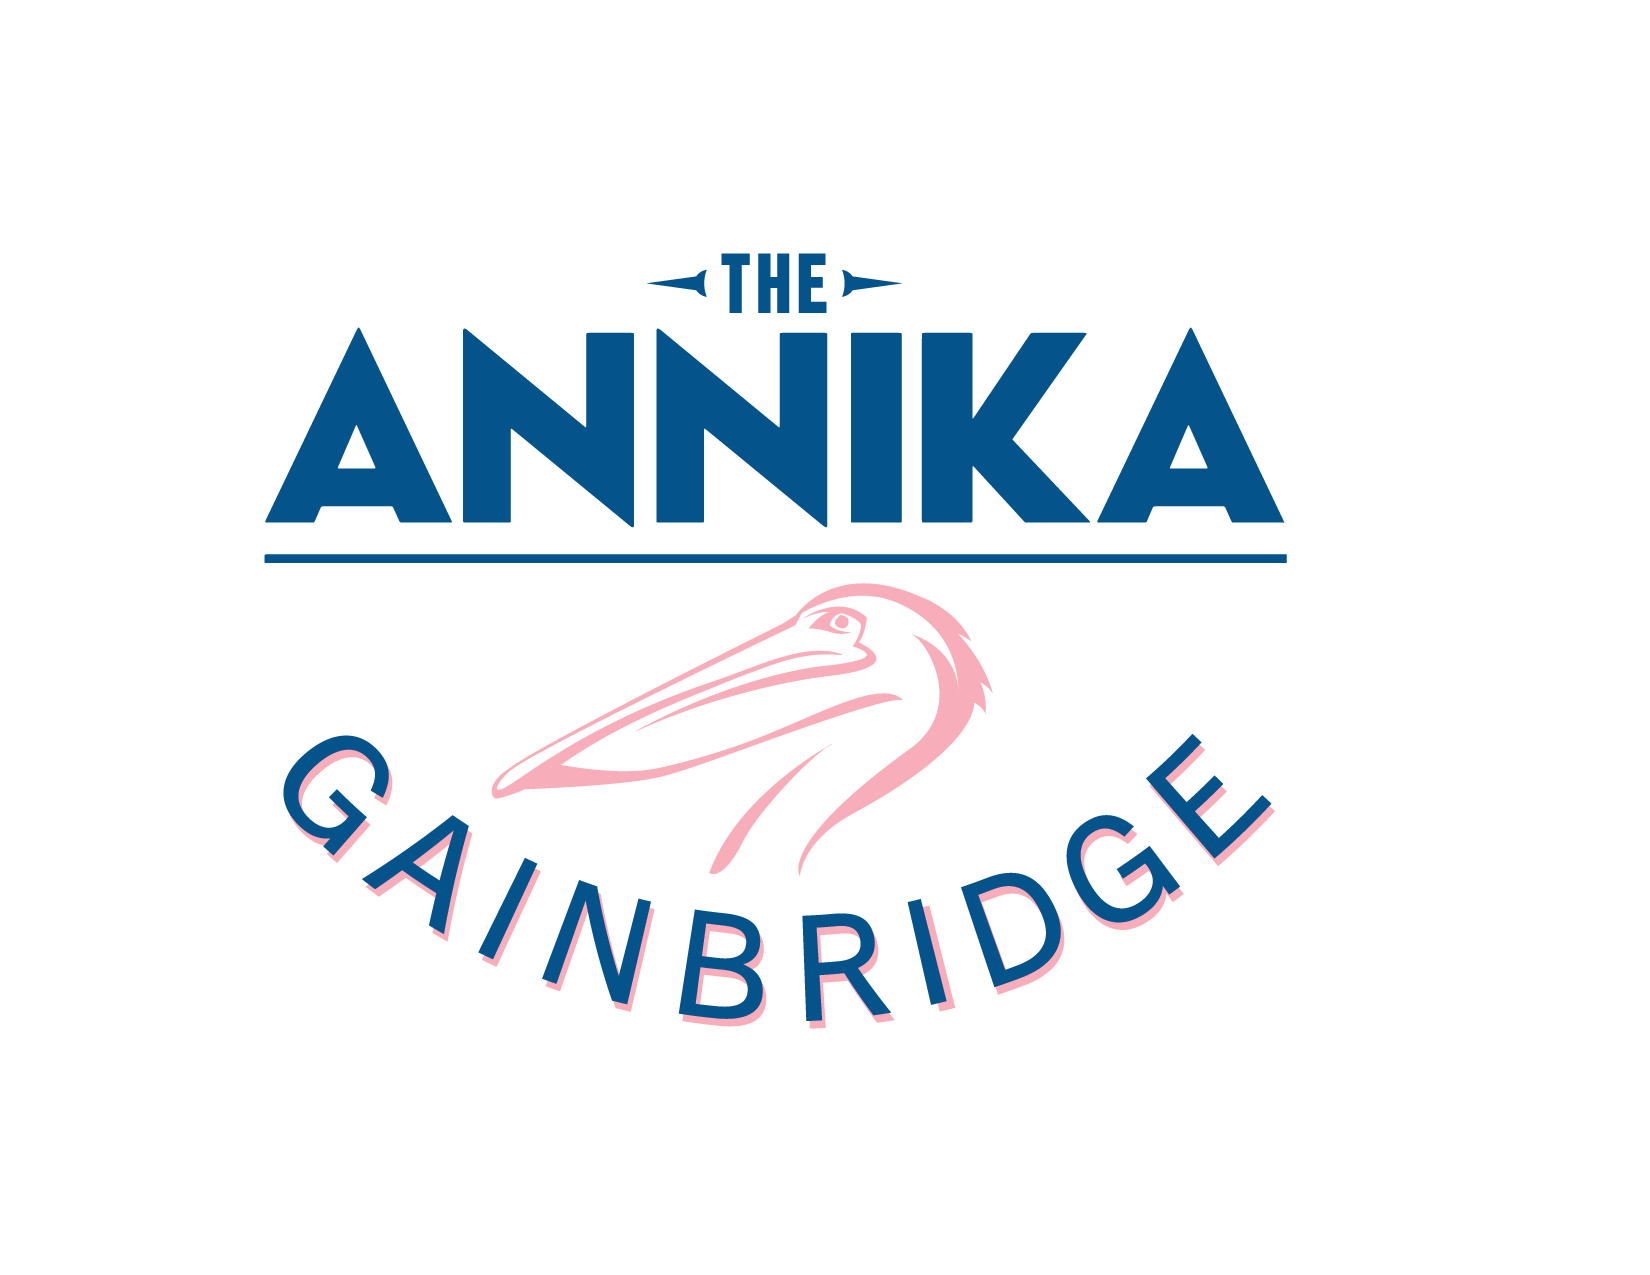 Hall-of-Famer Annika Sorenstam to Host Tampa Bay's LPGA Tour Event Starting in 2023: 'THE ANNIKA driven by Gainbridge at Pelican'